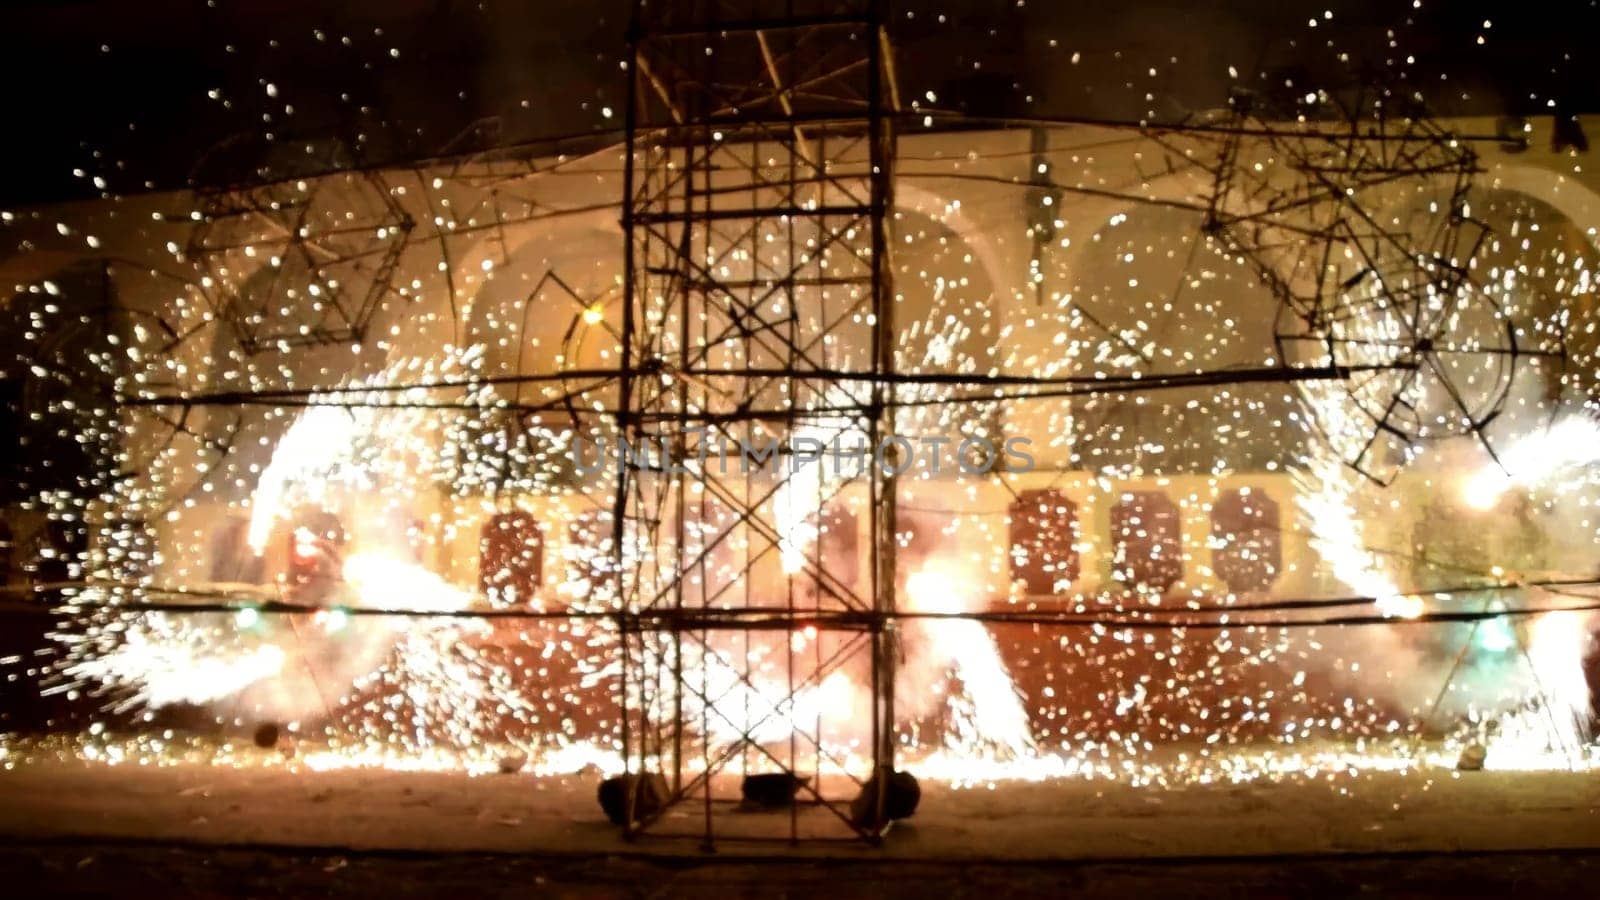 Vibrant fireworks illuminate a scaffold at night, creating a stunning light show